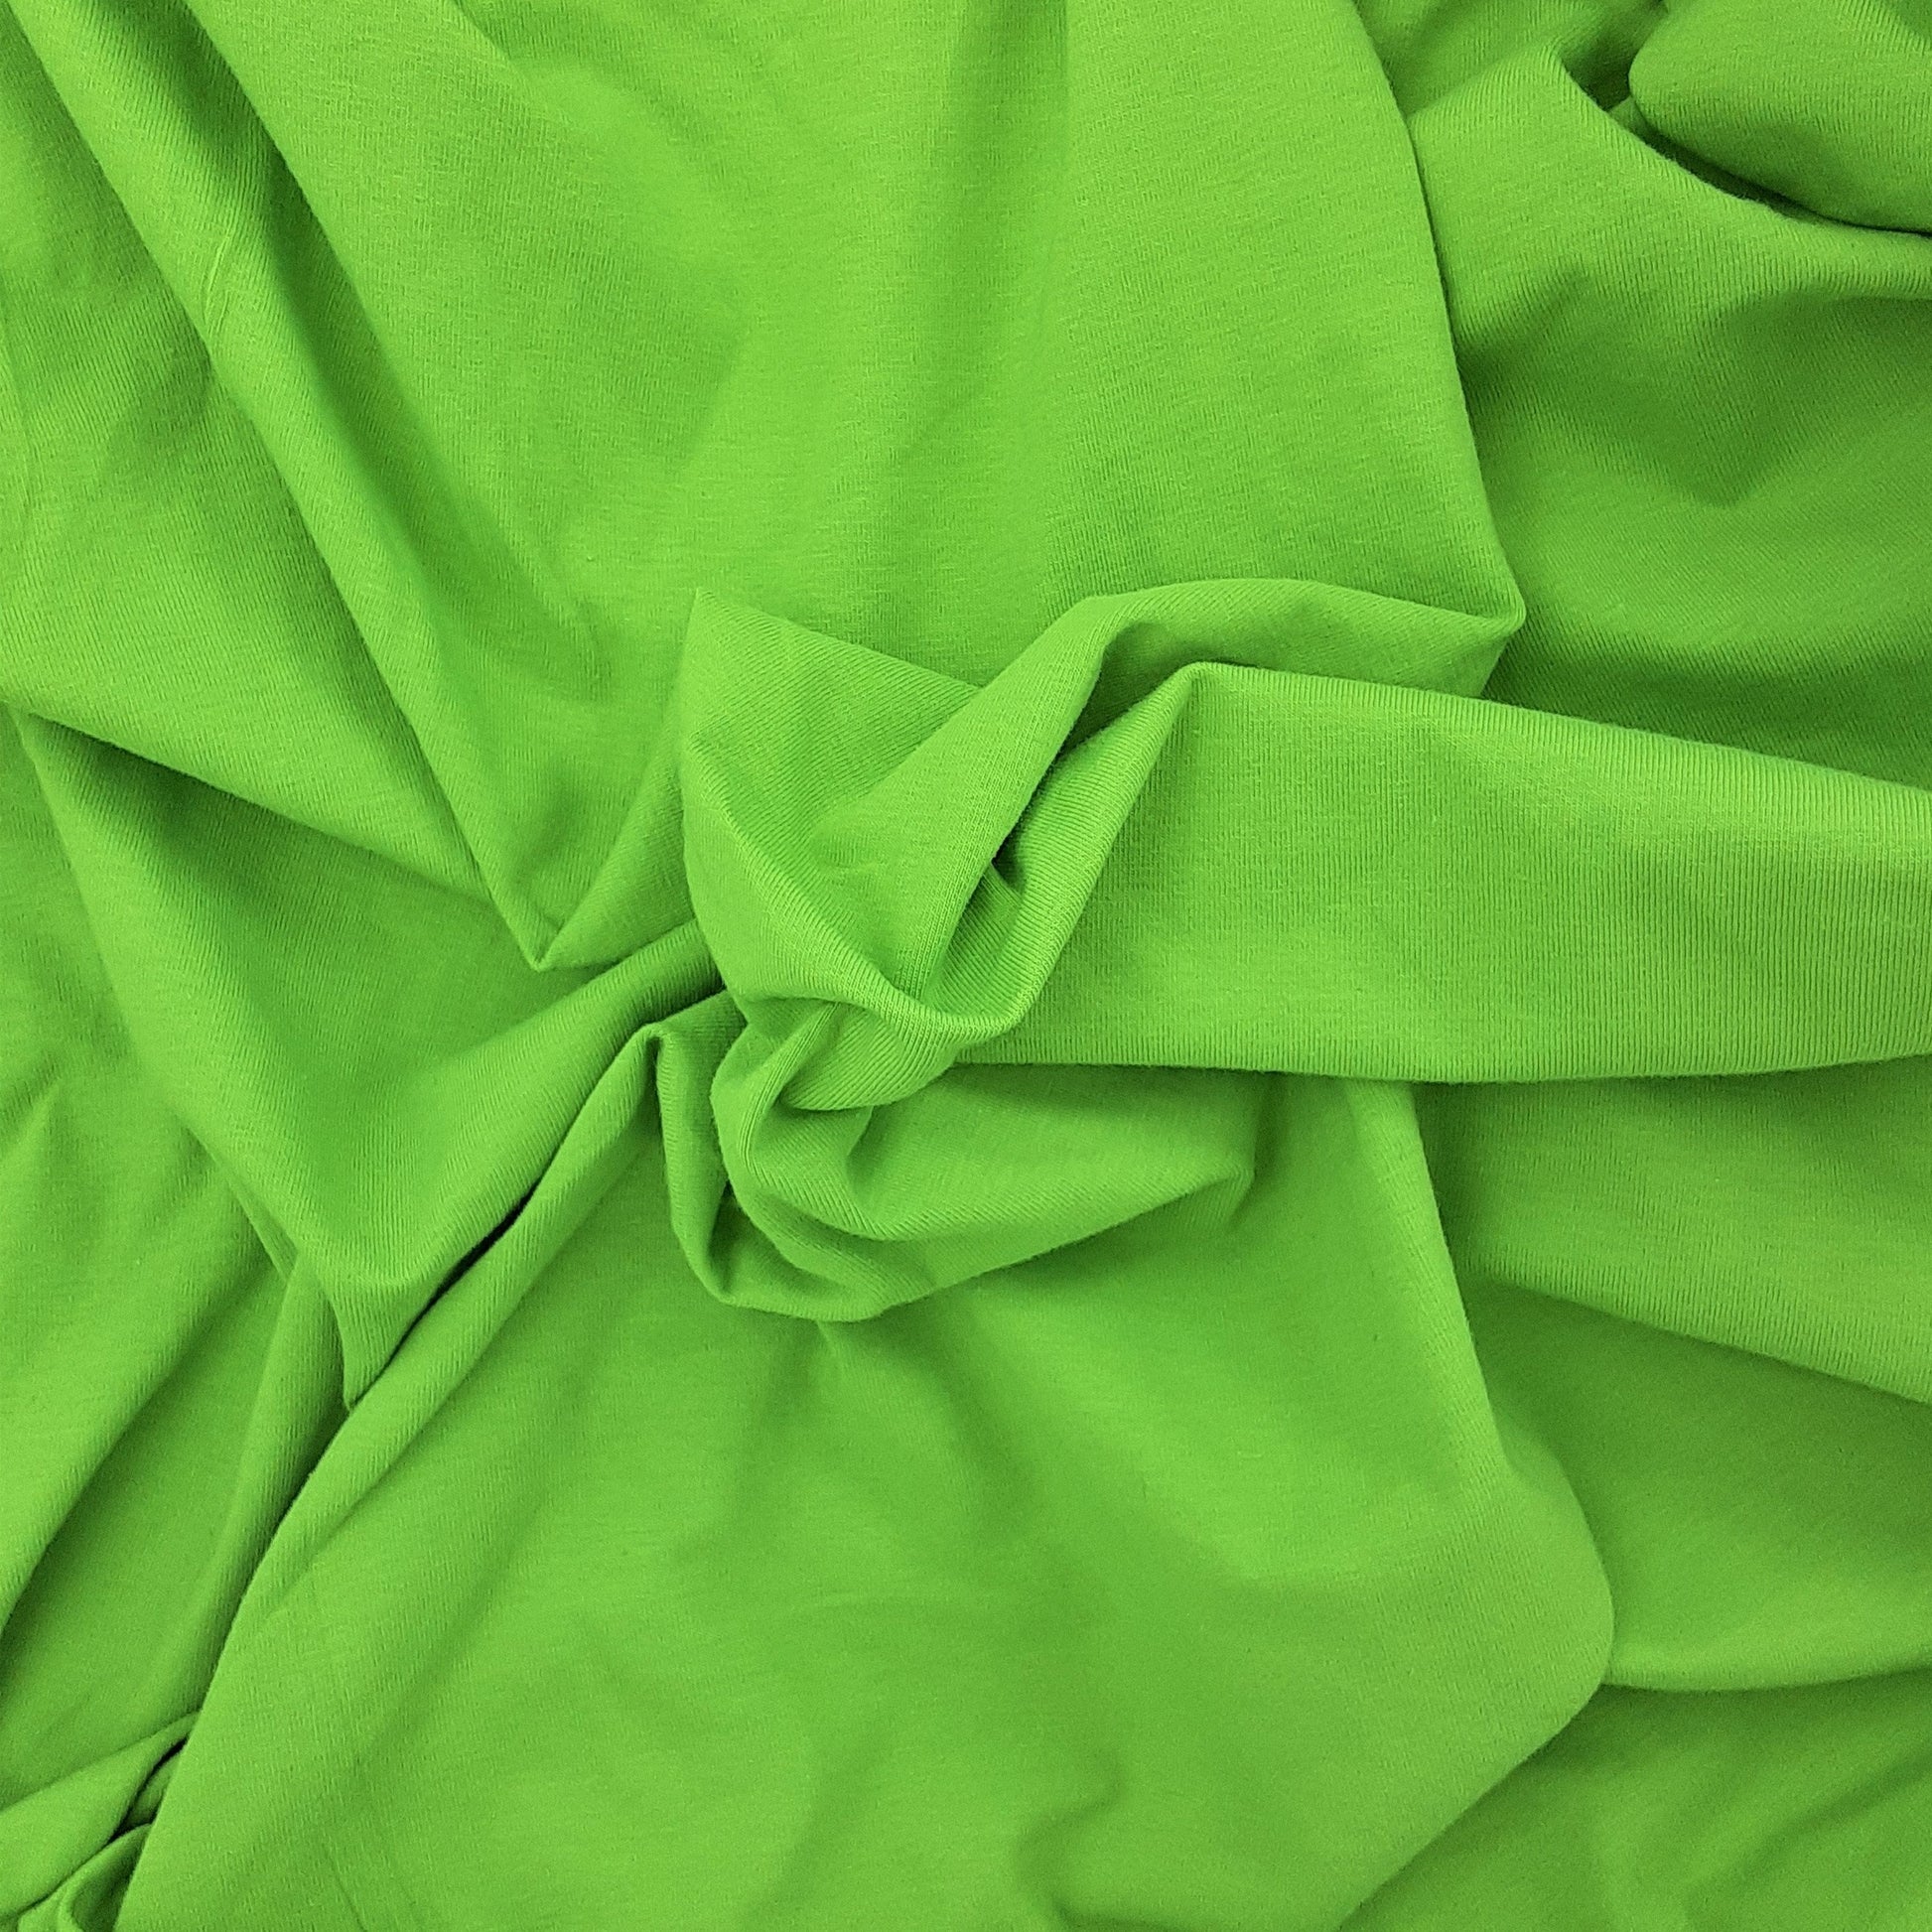 Lime 10 Ounce Cotton/Spandex Jersey Knit Fabric - SKU 2853F 